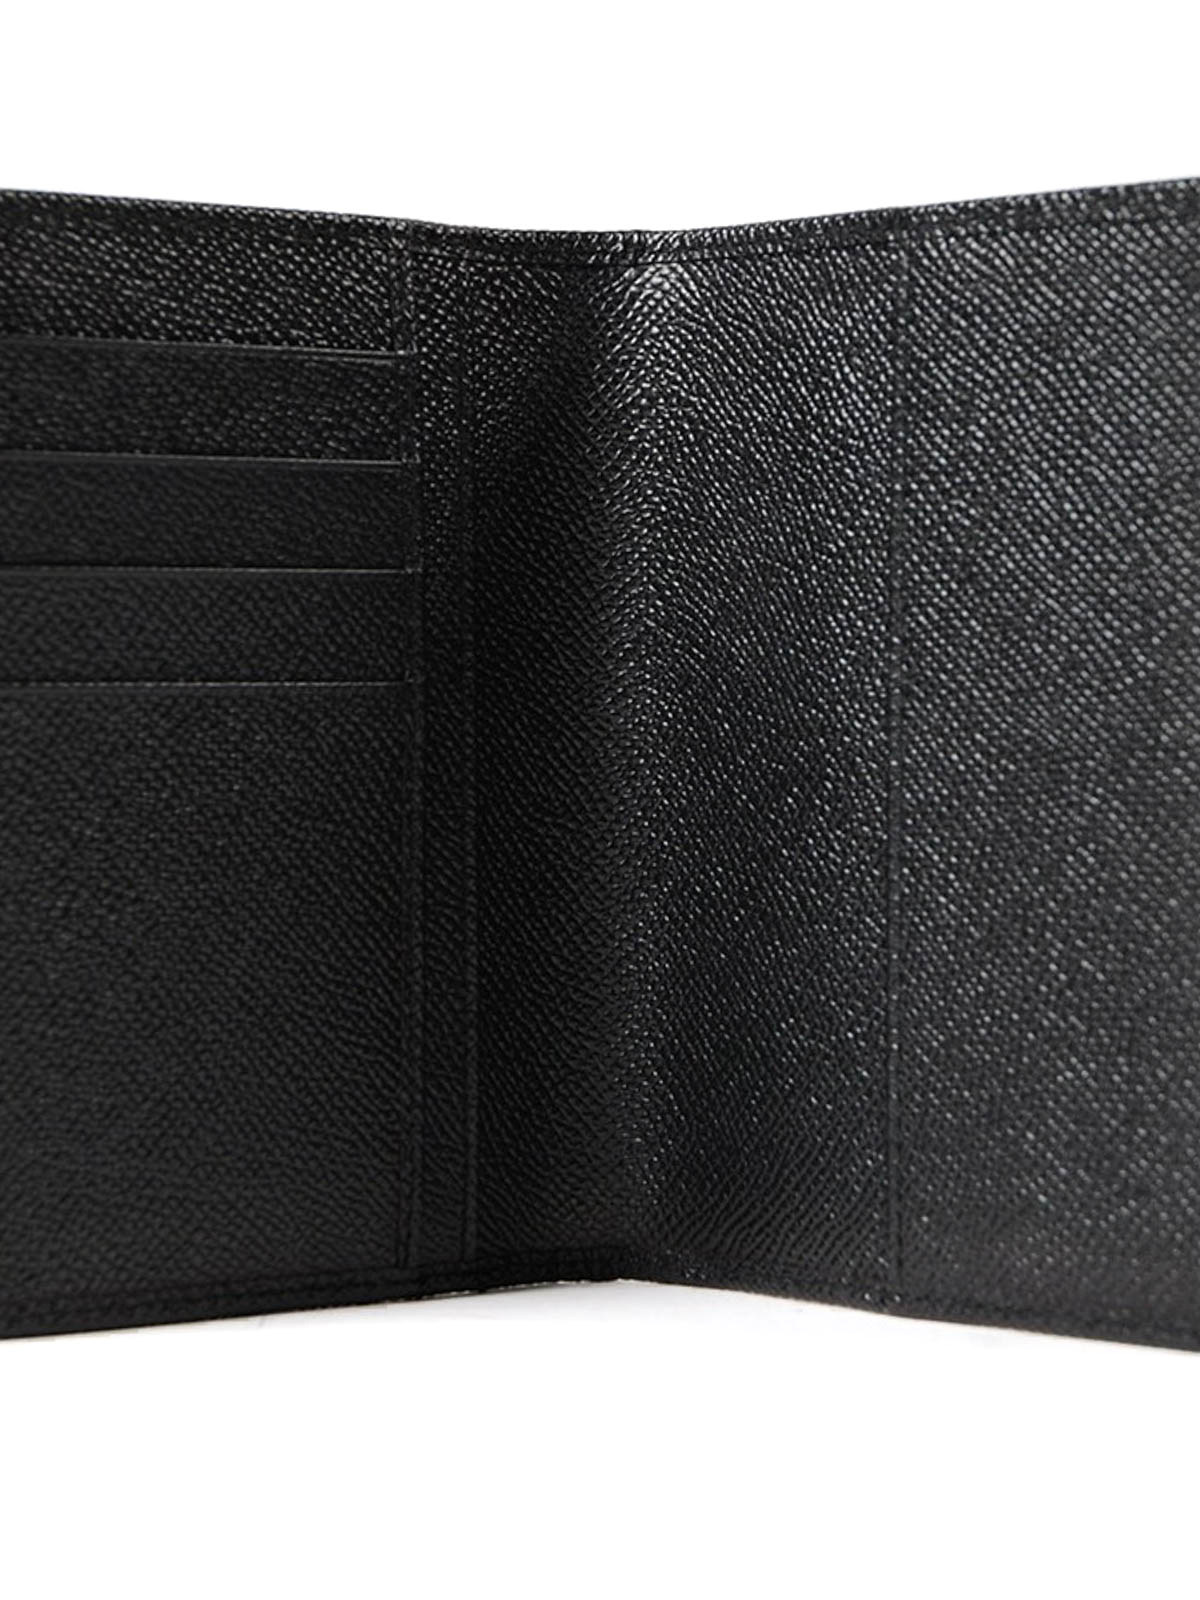 Passport Cover Taiga Leather - 